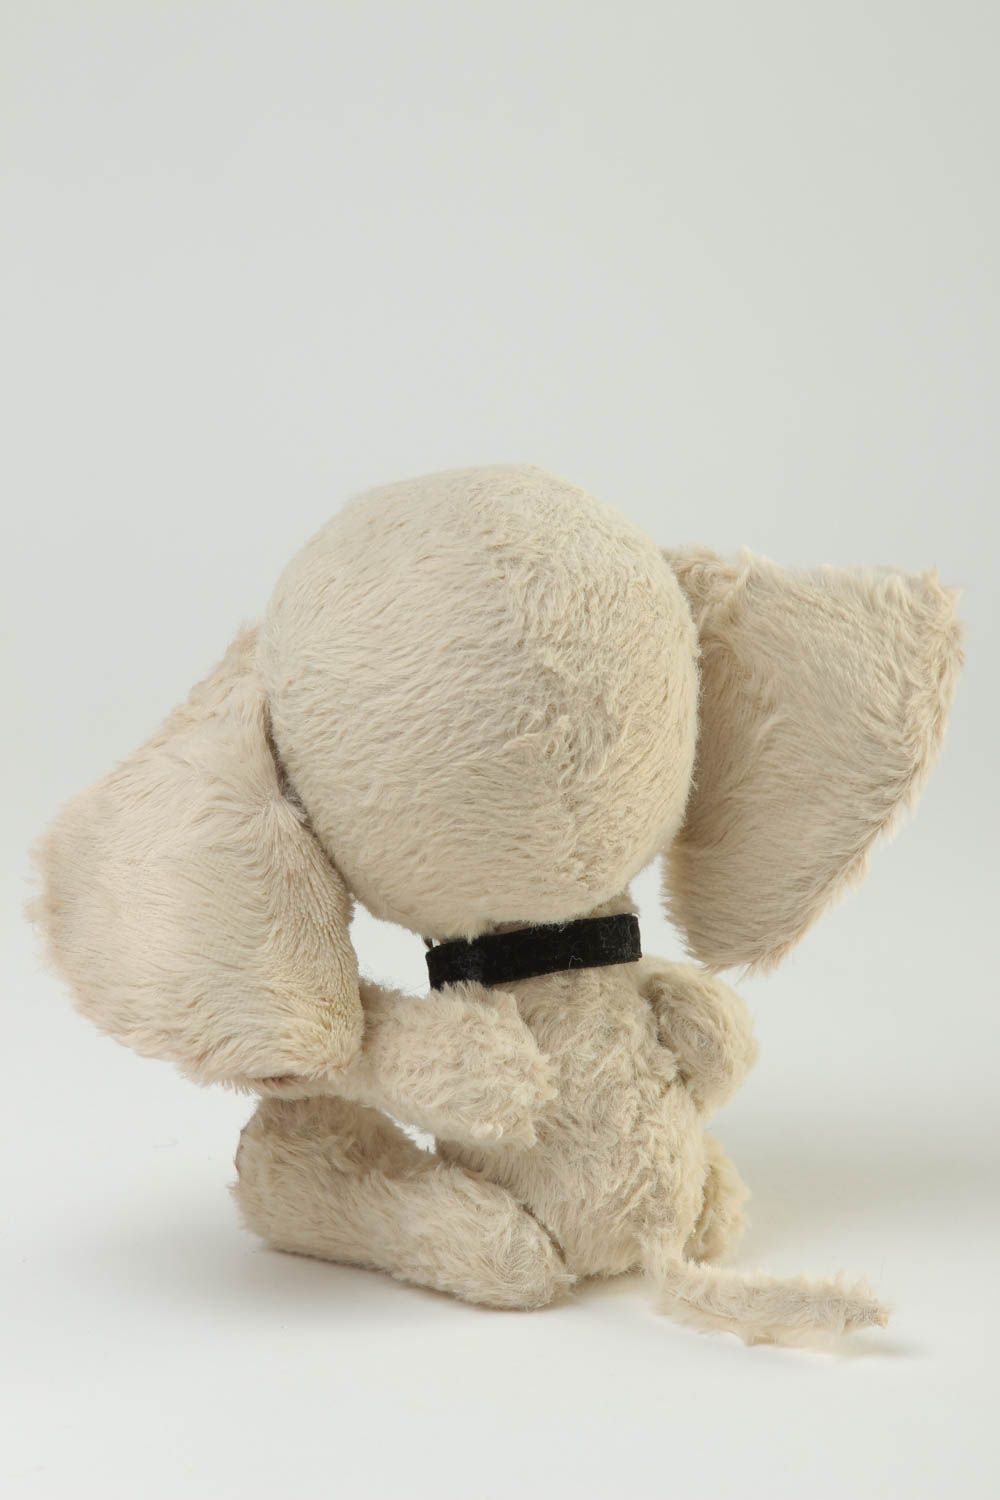 Handmade toy soft animal toy designer toy for baby nursery decor gift ideas photo 4